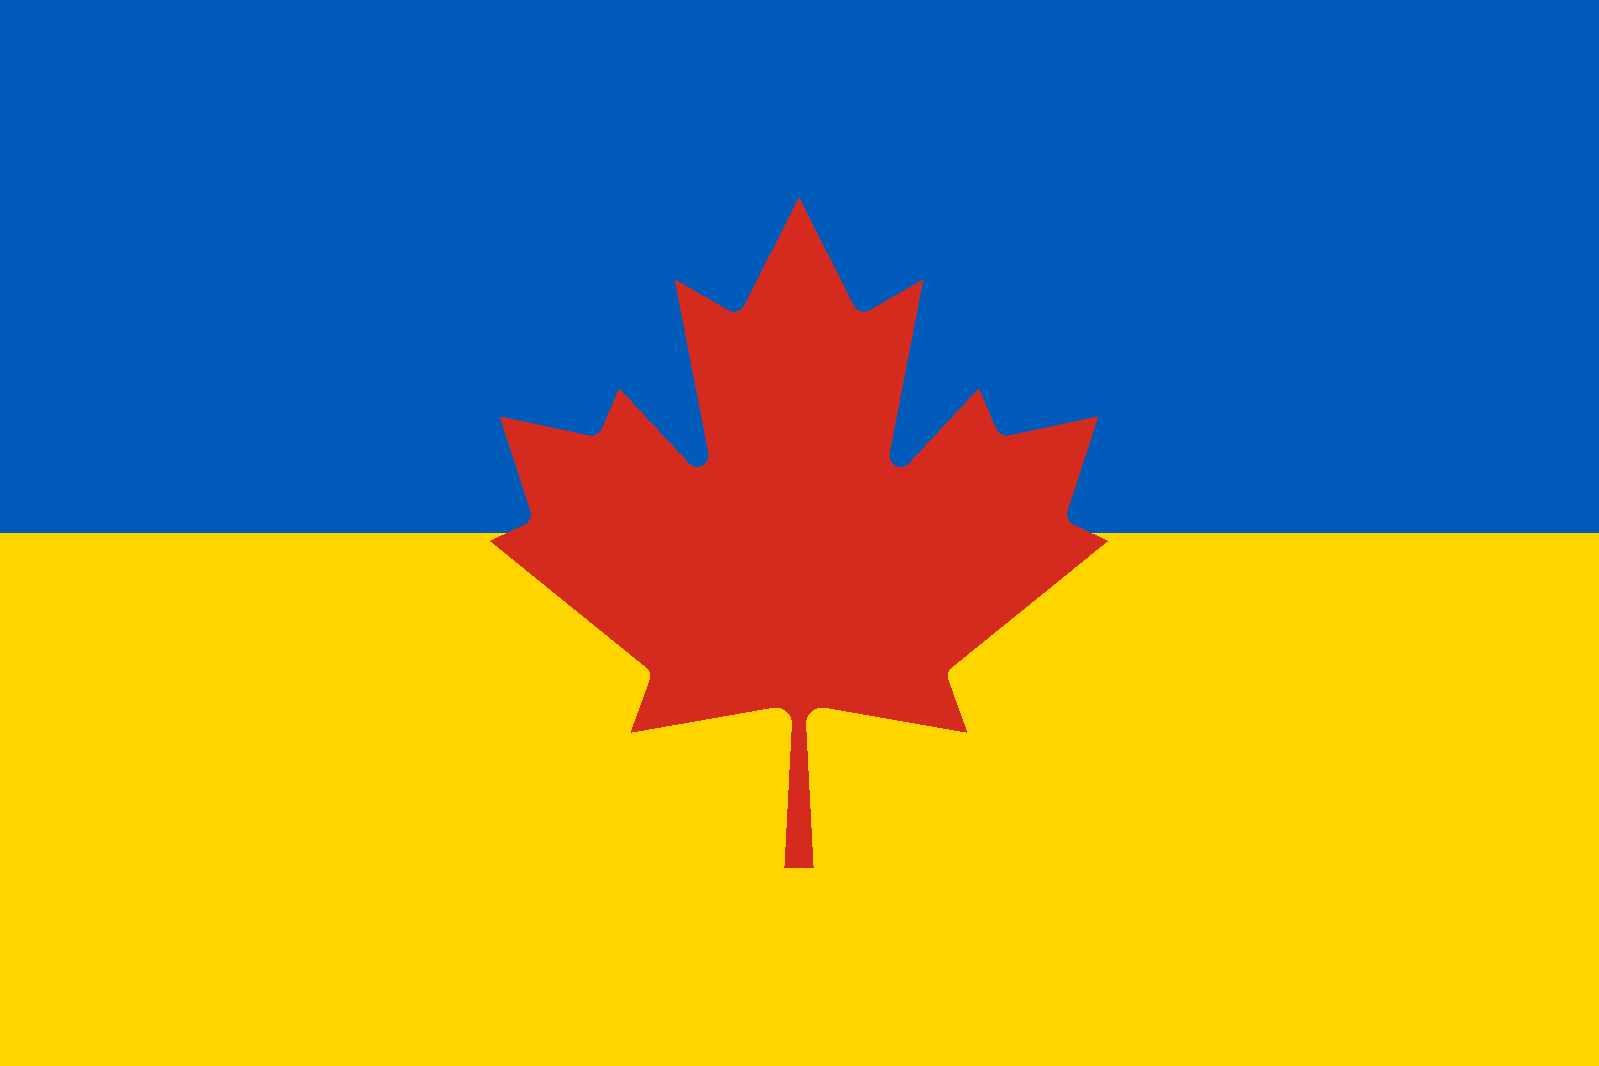 Canadian Maple Leave over Ukrainian Flag